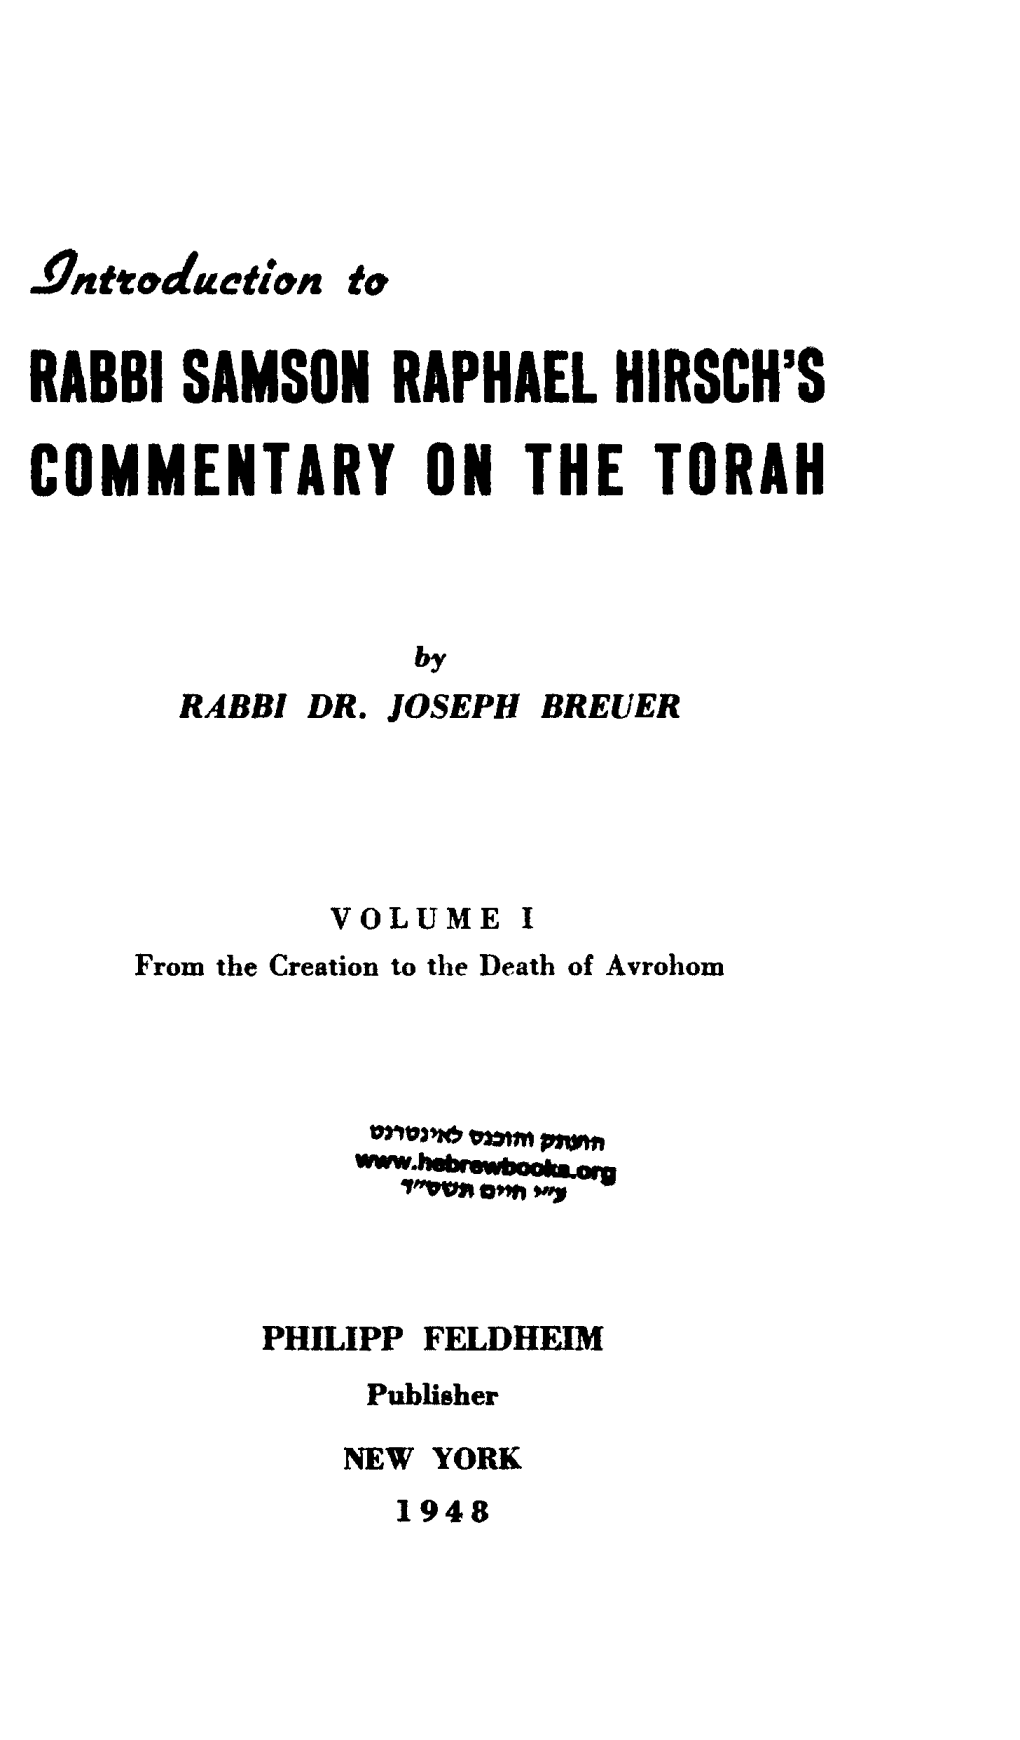 Rabbi Samson Raphael Hirsch's Commentary on the Torah